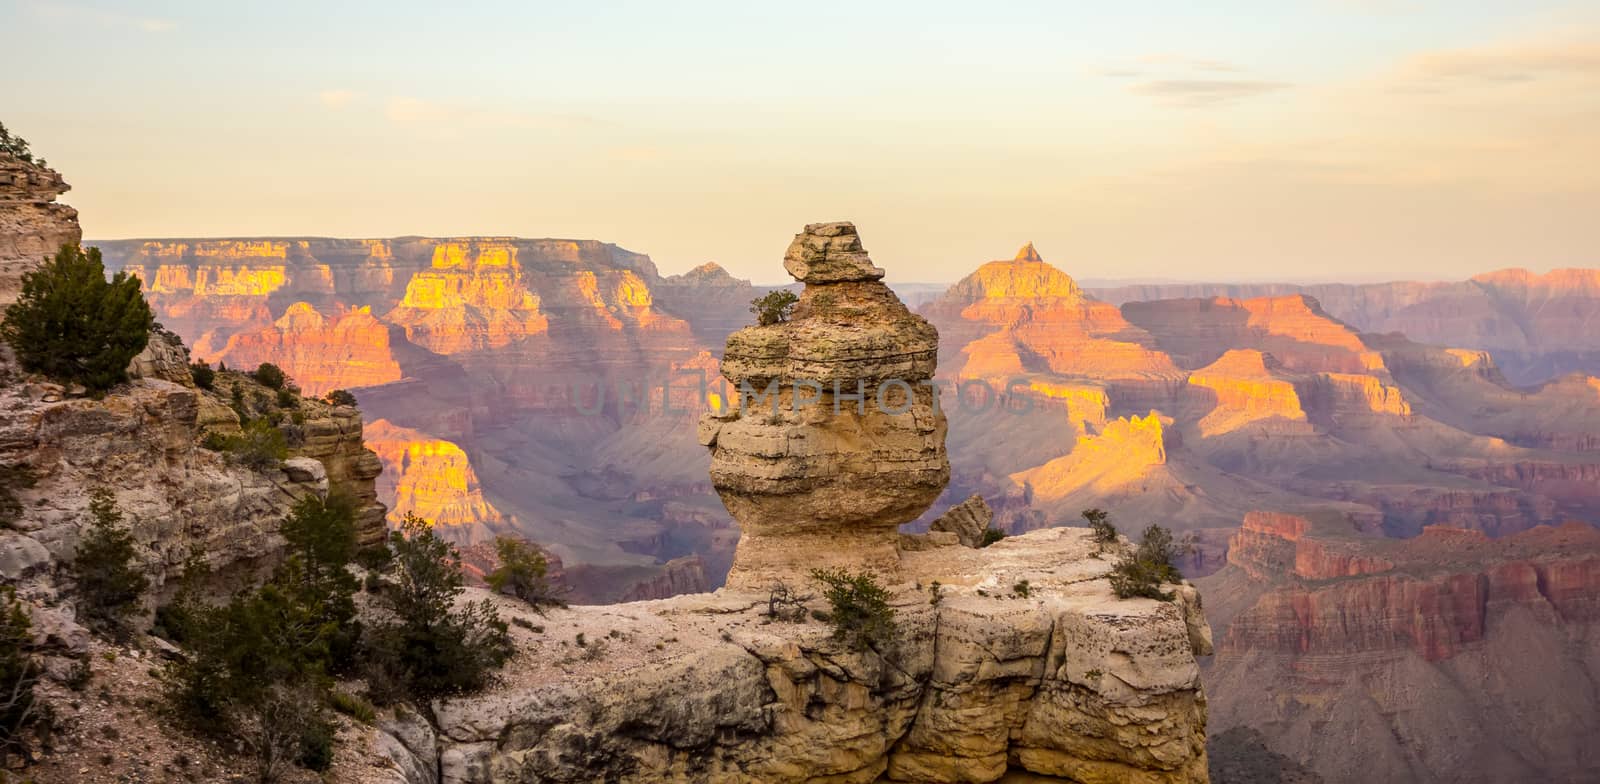 scenery around grand canyon in arizona by digidreamgrafix